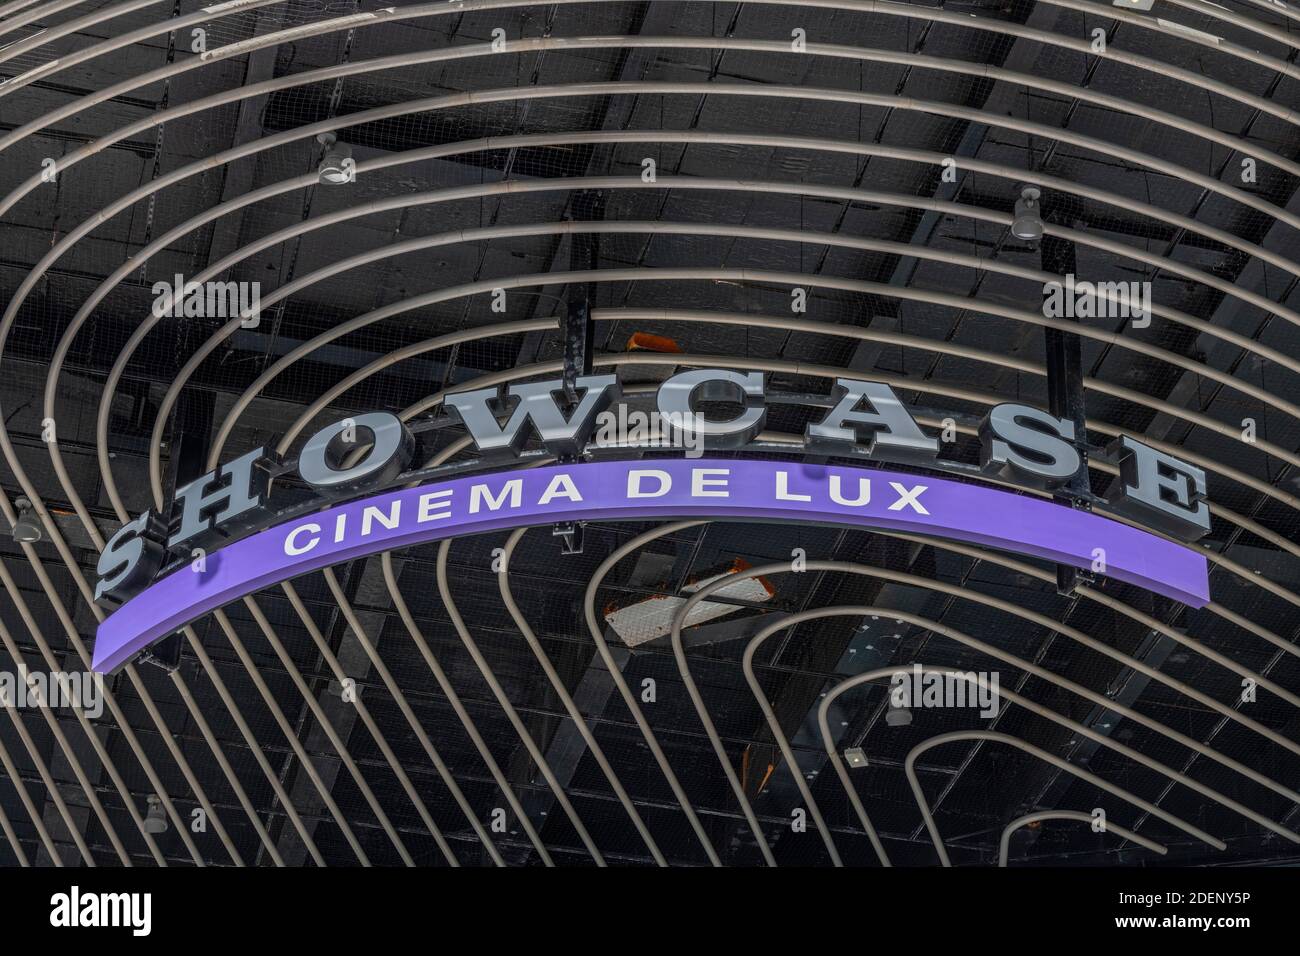 a large showcase cinema sign showcase cinema deluxe Stock Photo